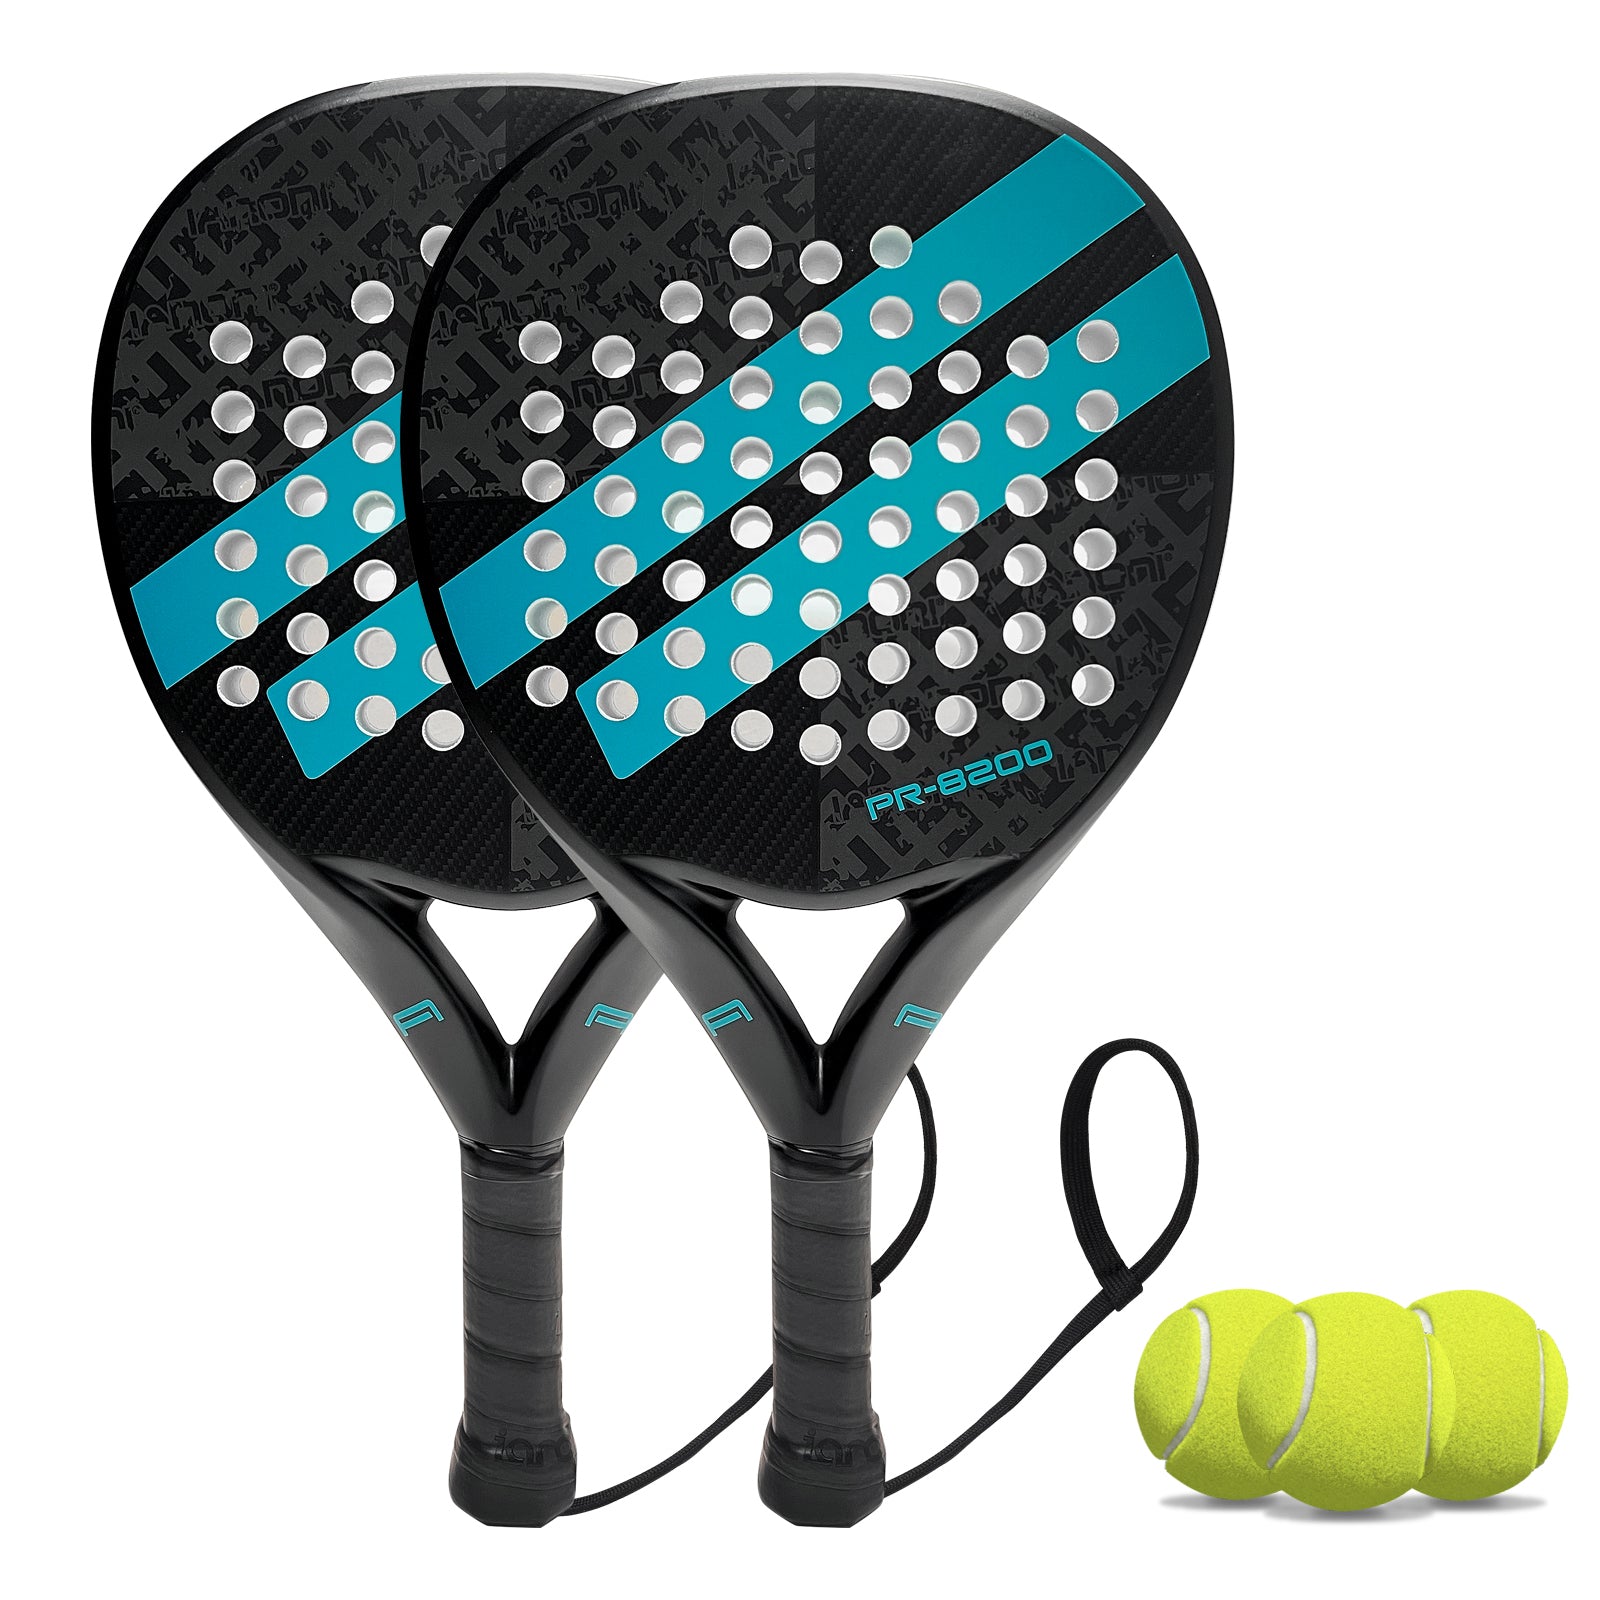 paddle tennis equipment